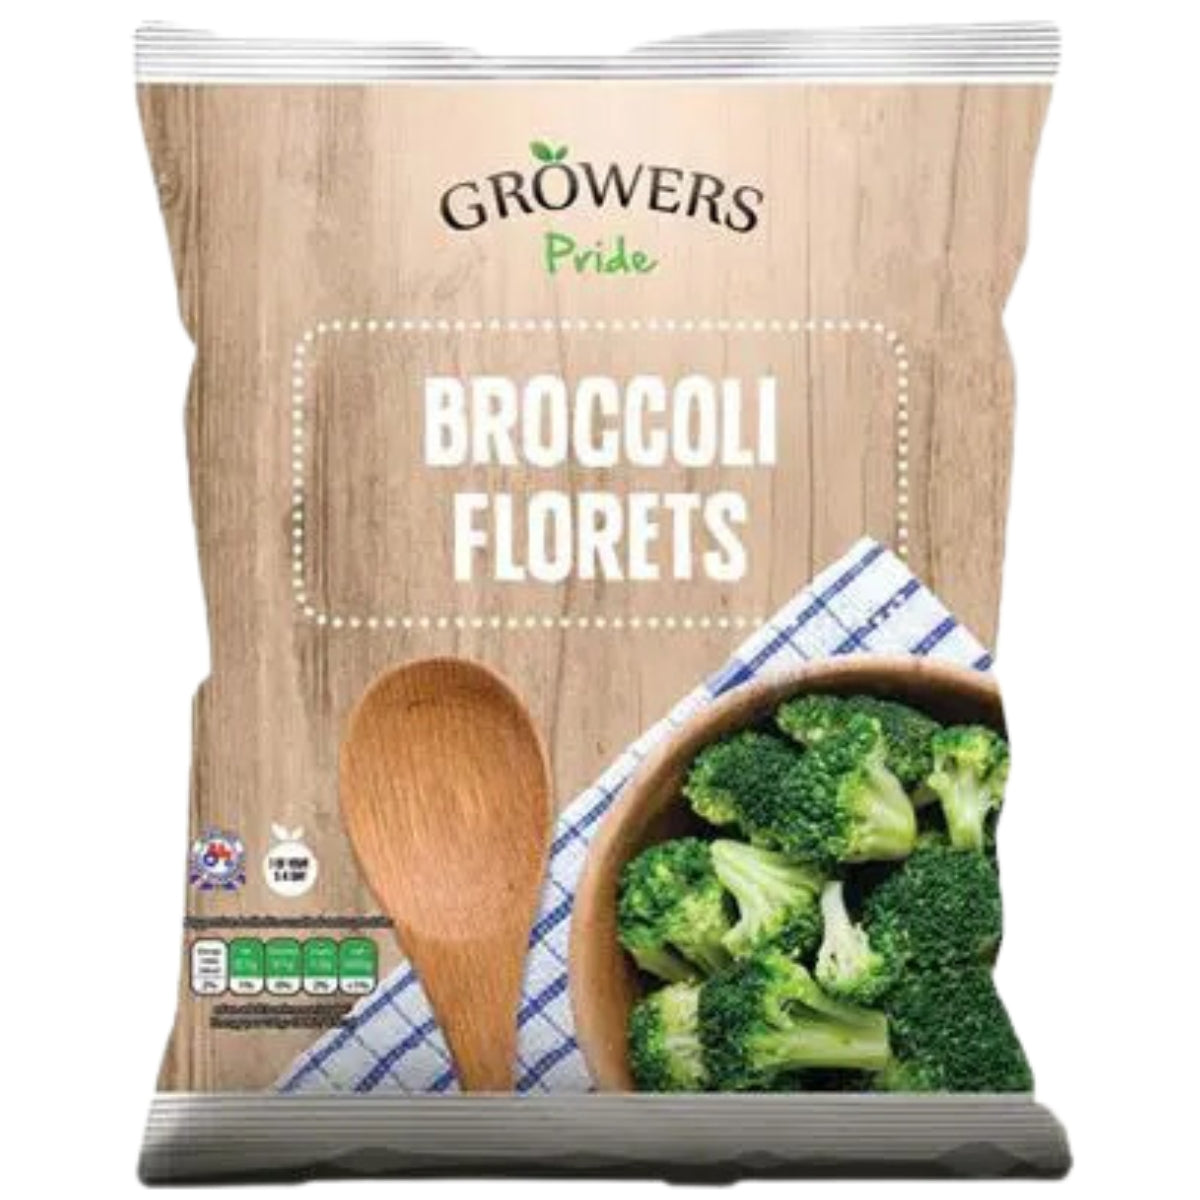 Growers Pride - Broccoli Florets - 450g pure broccoli florets.